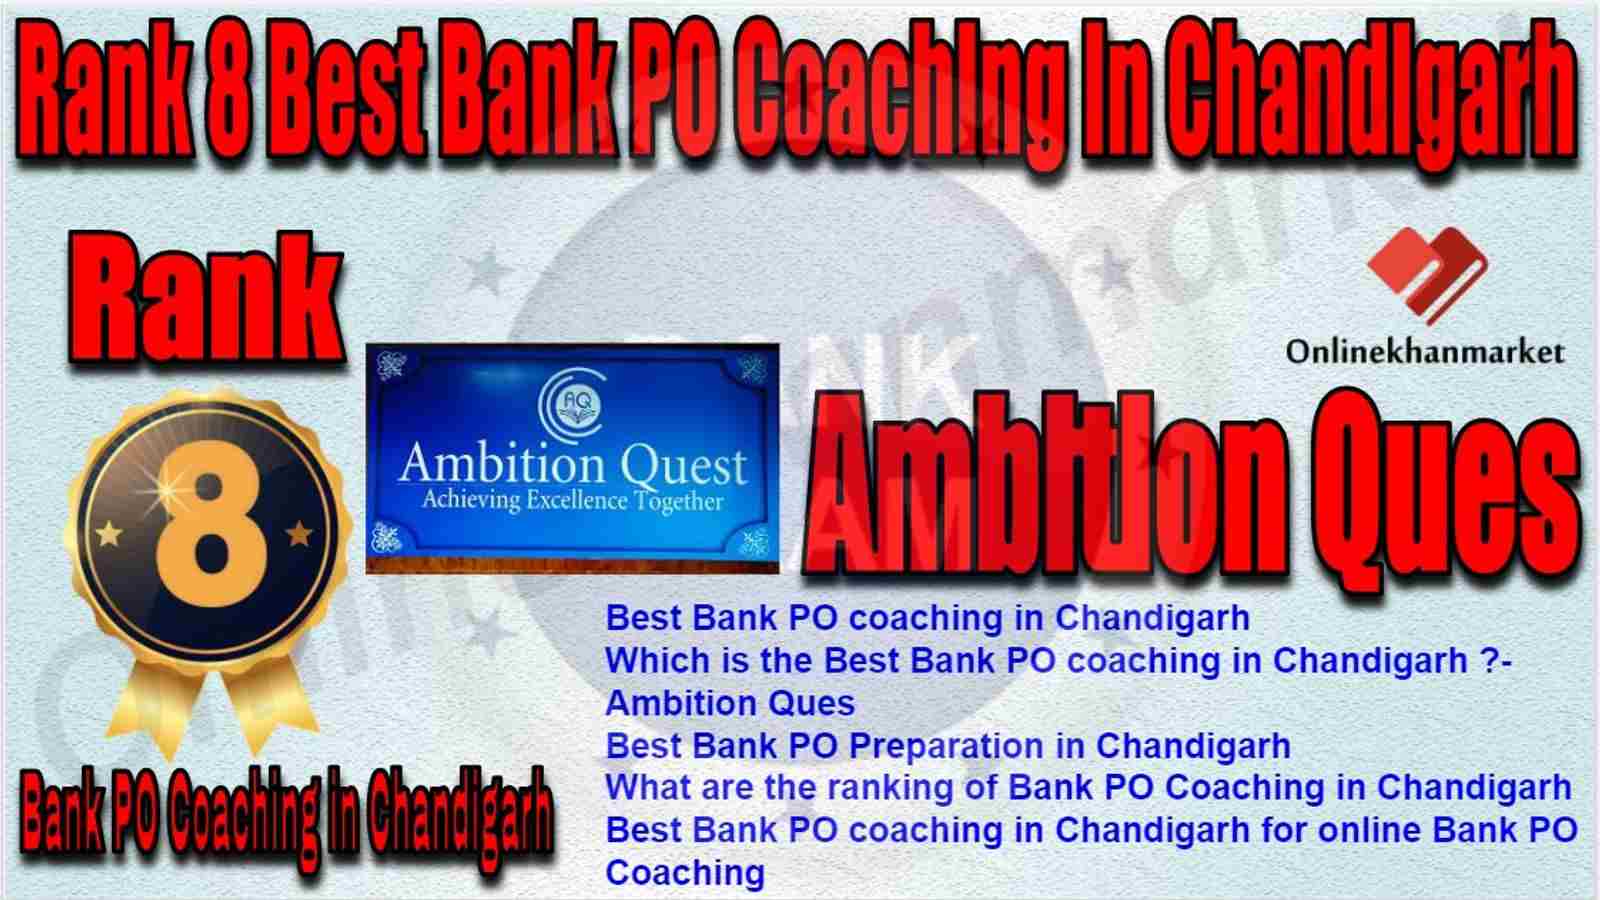 Rank 8 Best Bank PO Coaching in Chandigarh